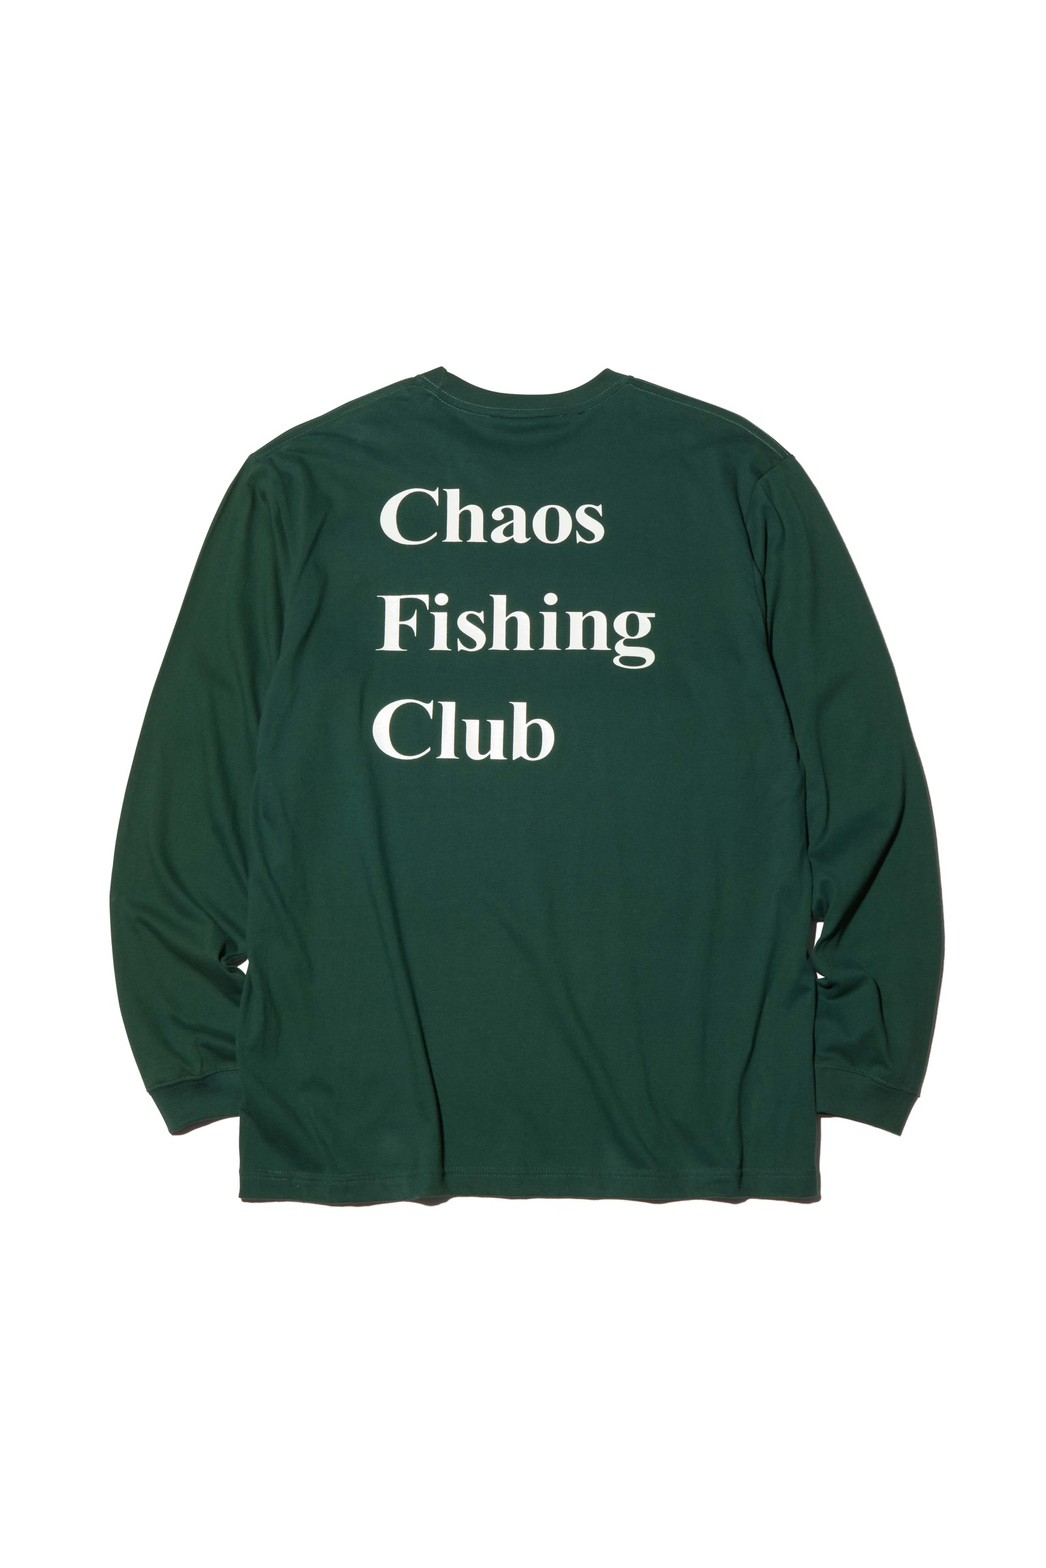 Chaos Fishing Club/カオスフィッシングクラブ/LOGO L/S TEE(M GREEN ...